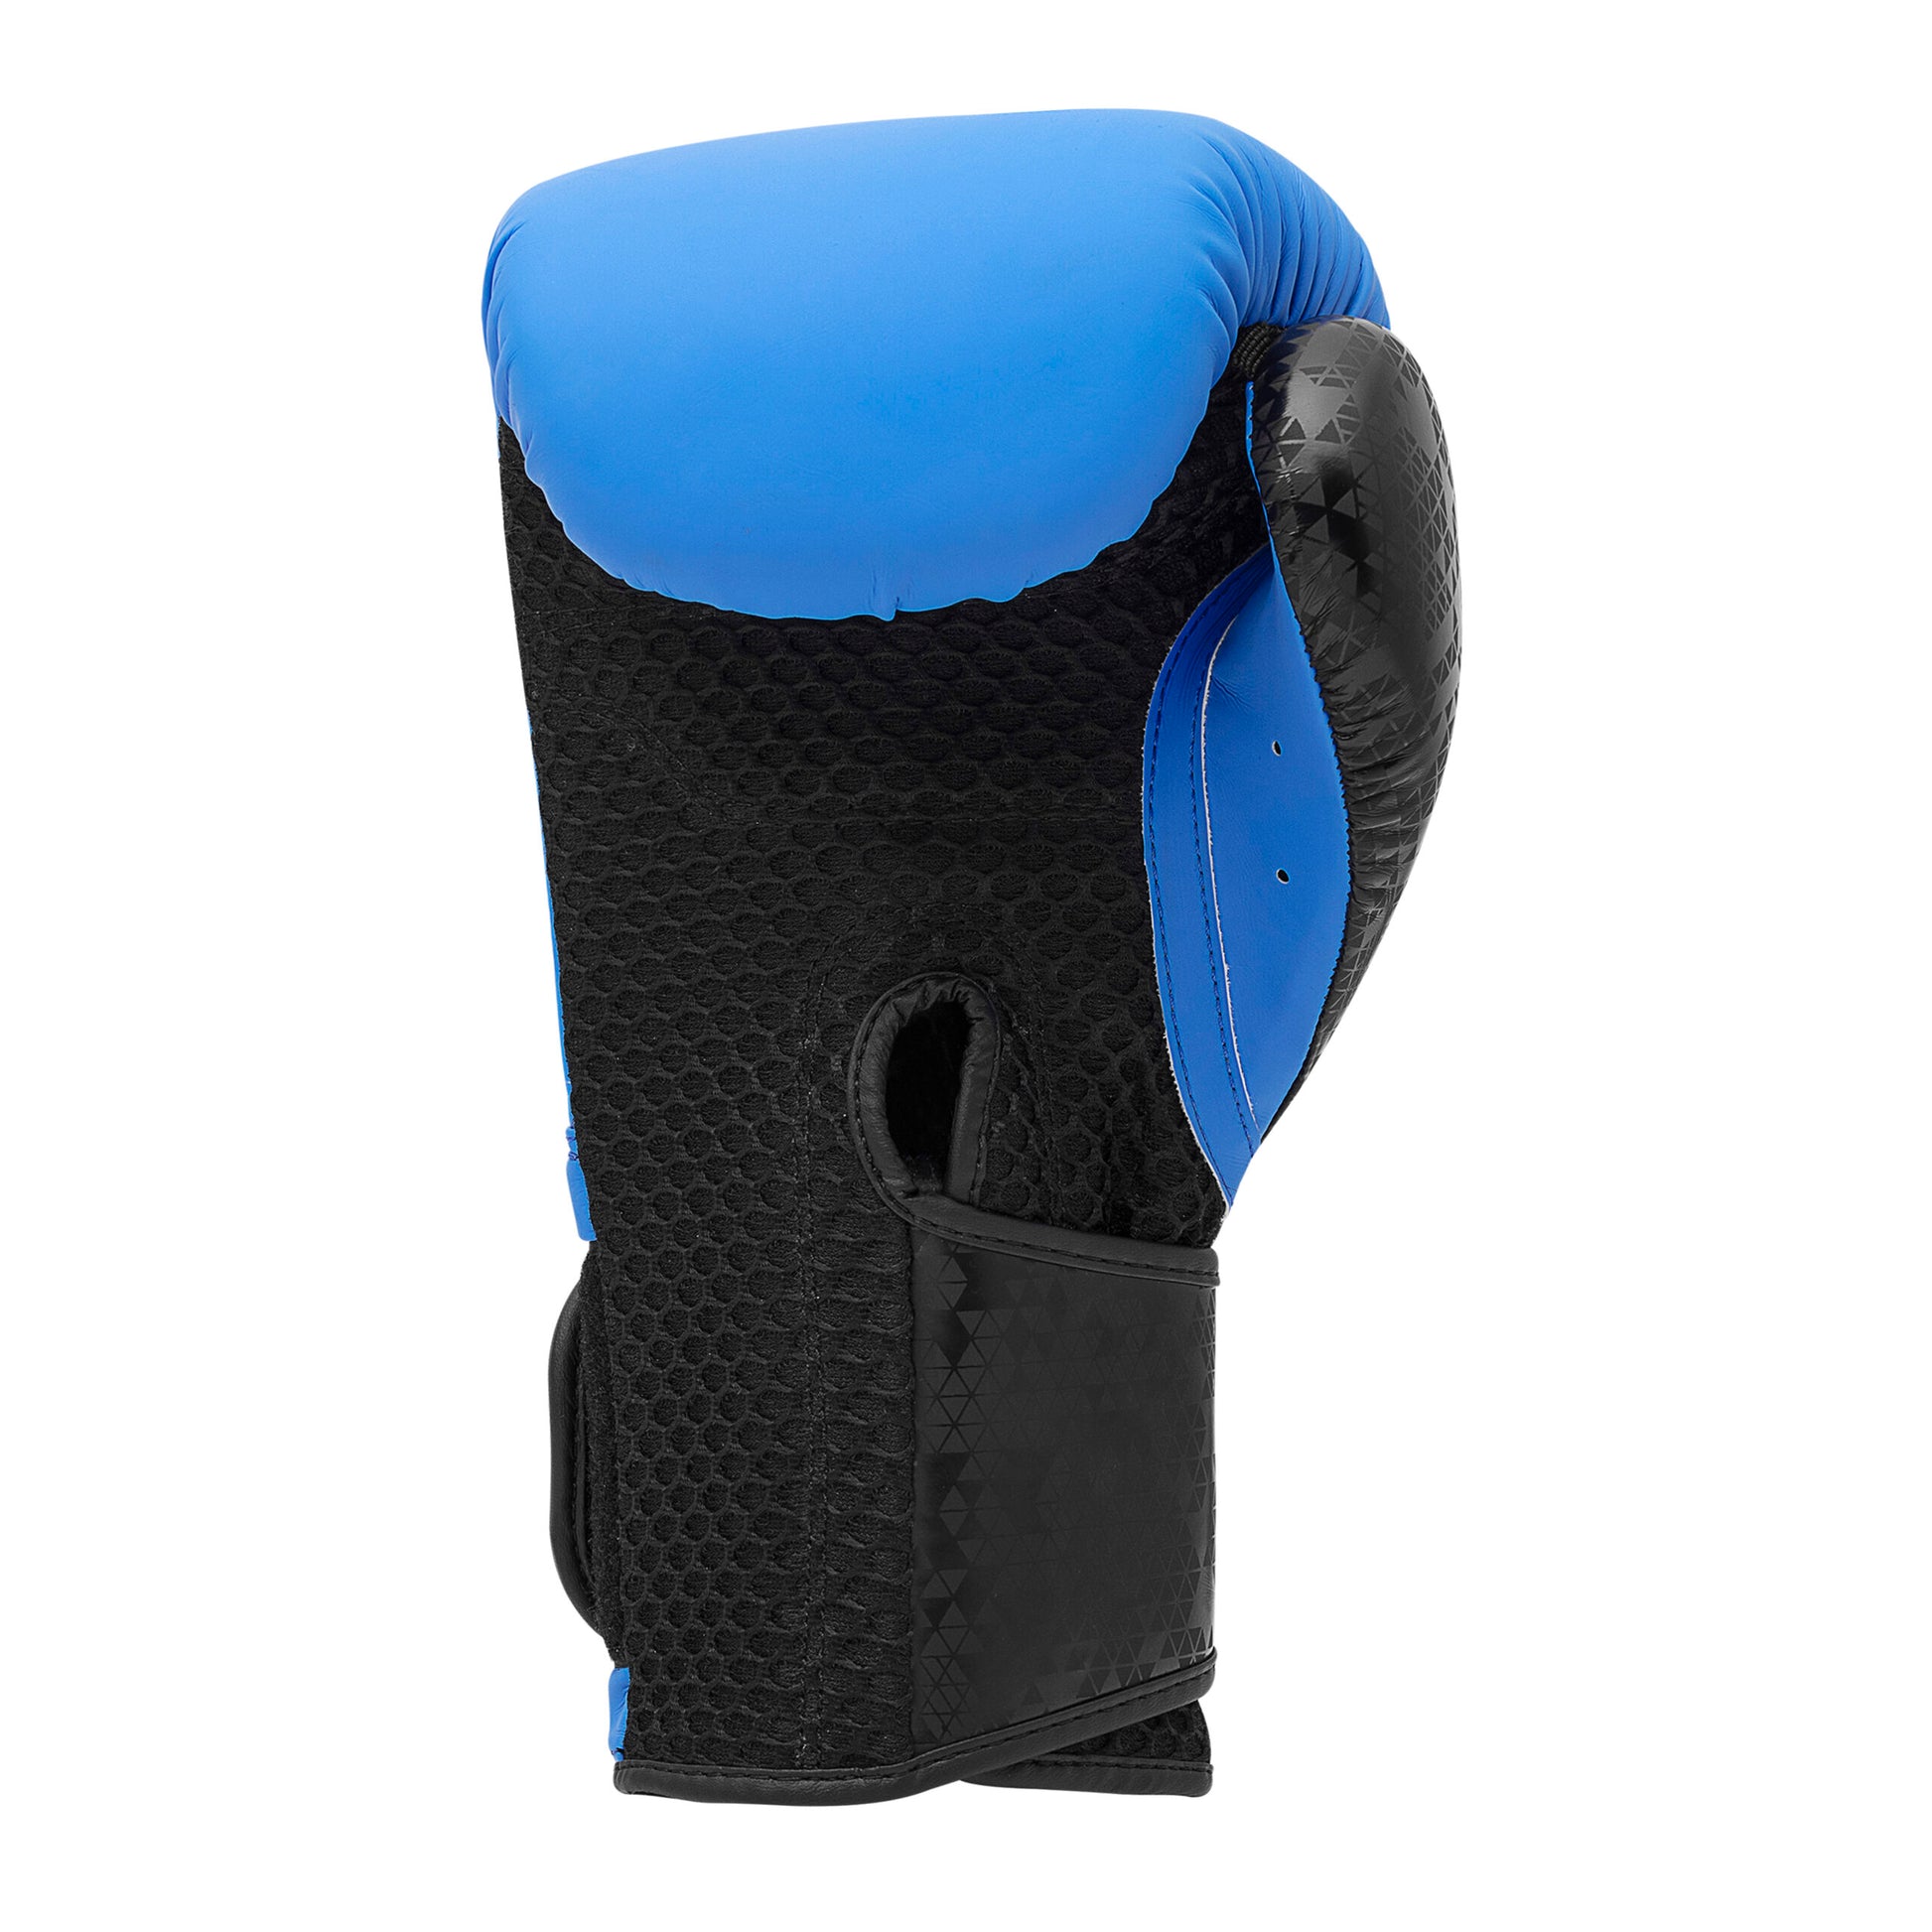 Adic50tg Combat 50 Training Boxing Gloves Blue Rush Black 03